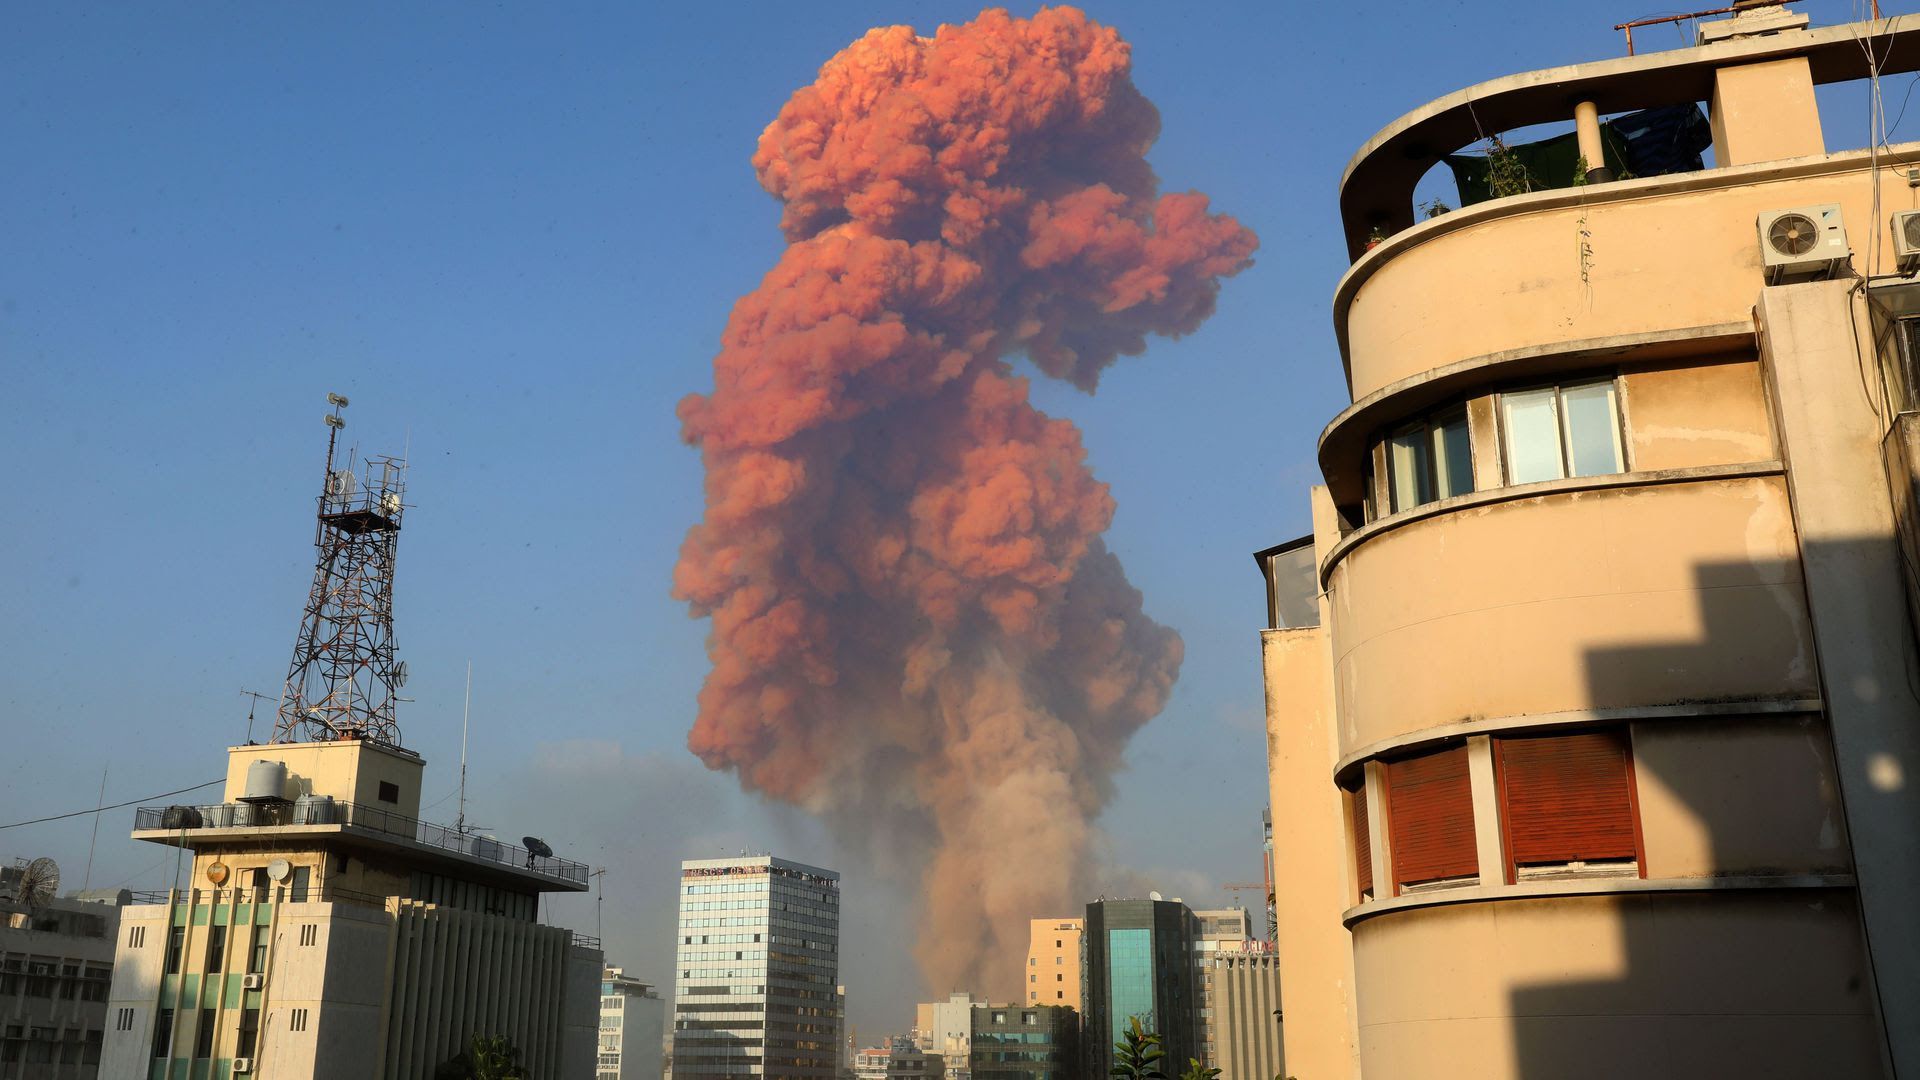 An orange-reddish smoke cloud seen in between buildings after an explosion in Beirut